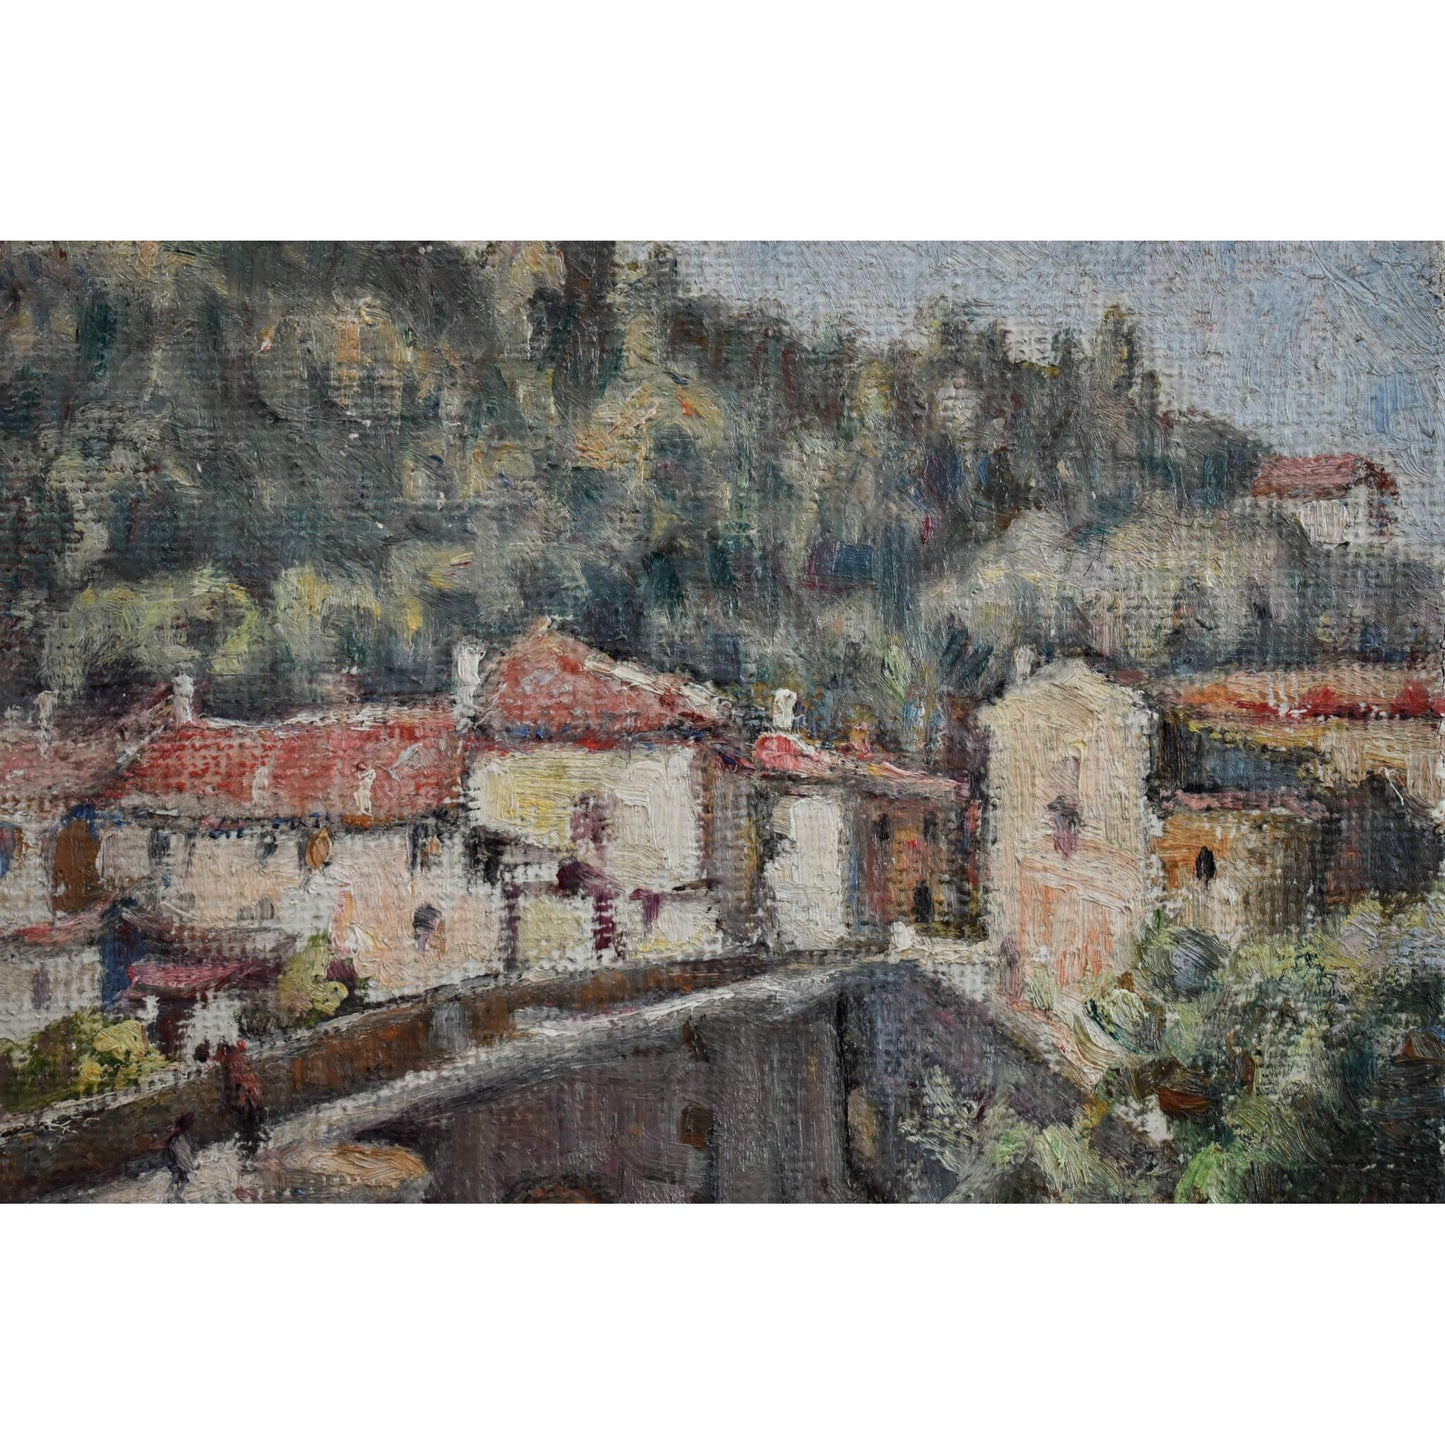 Vintage landscape oil painting impressionist art village view circa 1930 by Jean Galland for sale at Winckelmann Gallery